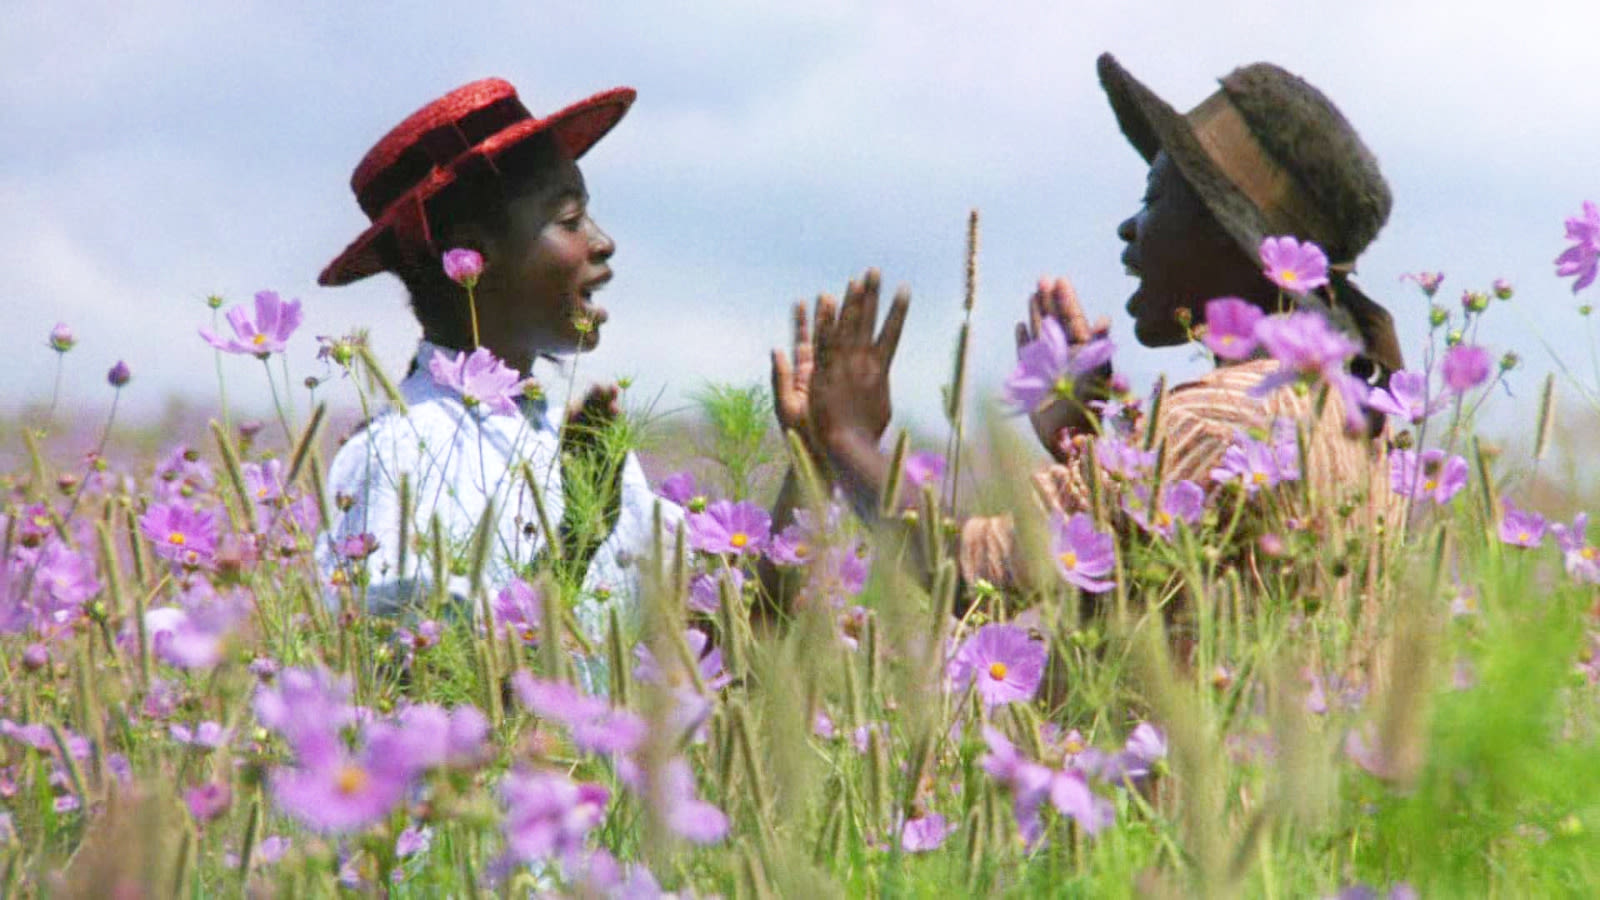 Why Director Steven Spielberg Got A Lot Of Criticism For The Color Purple - SlashFilm